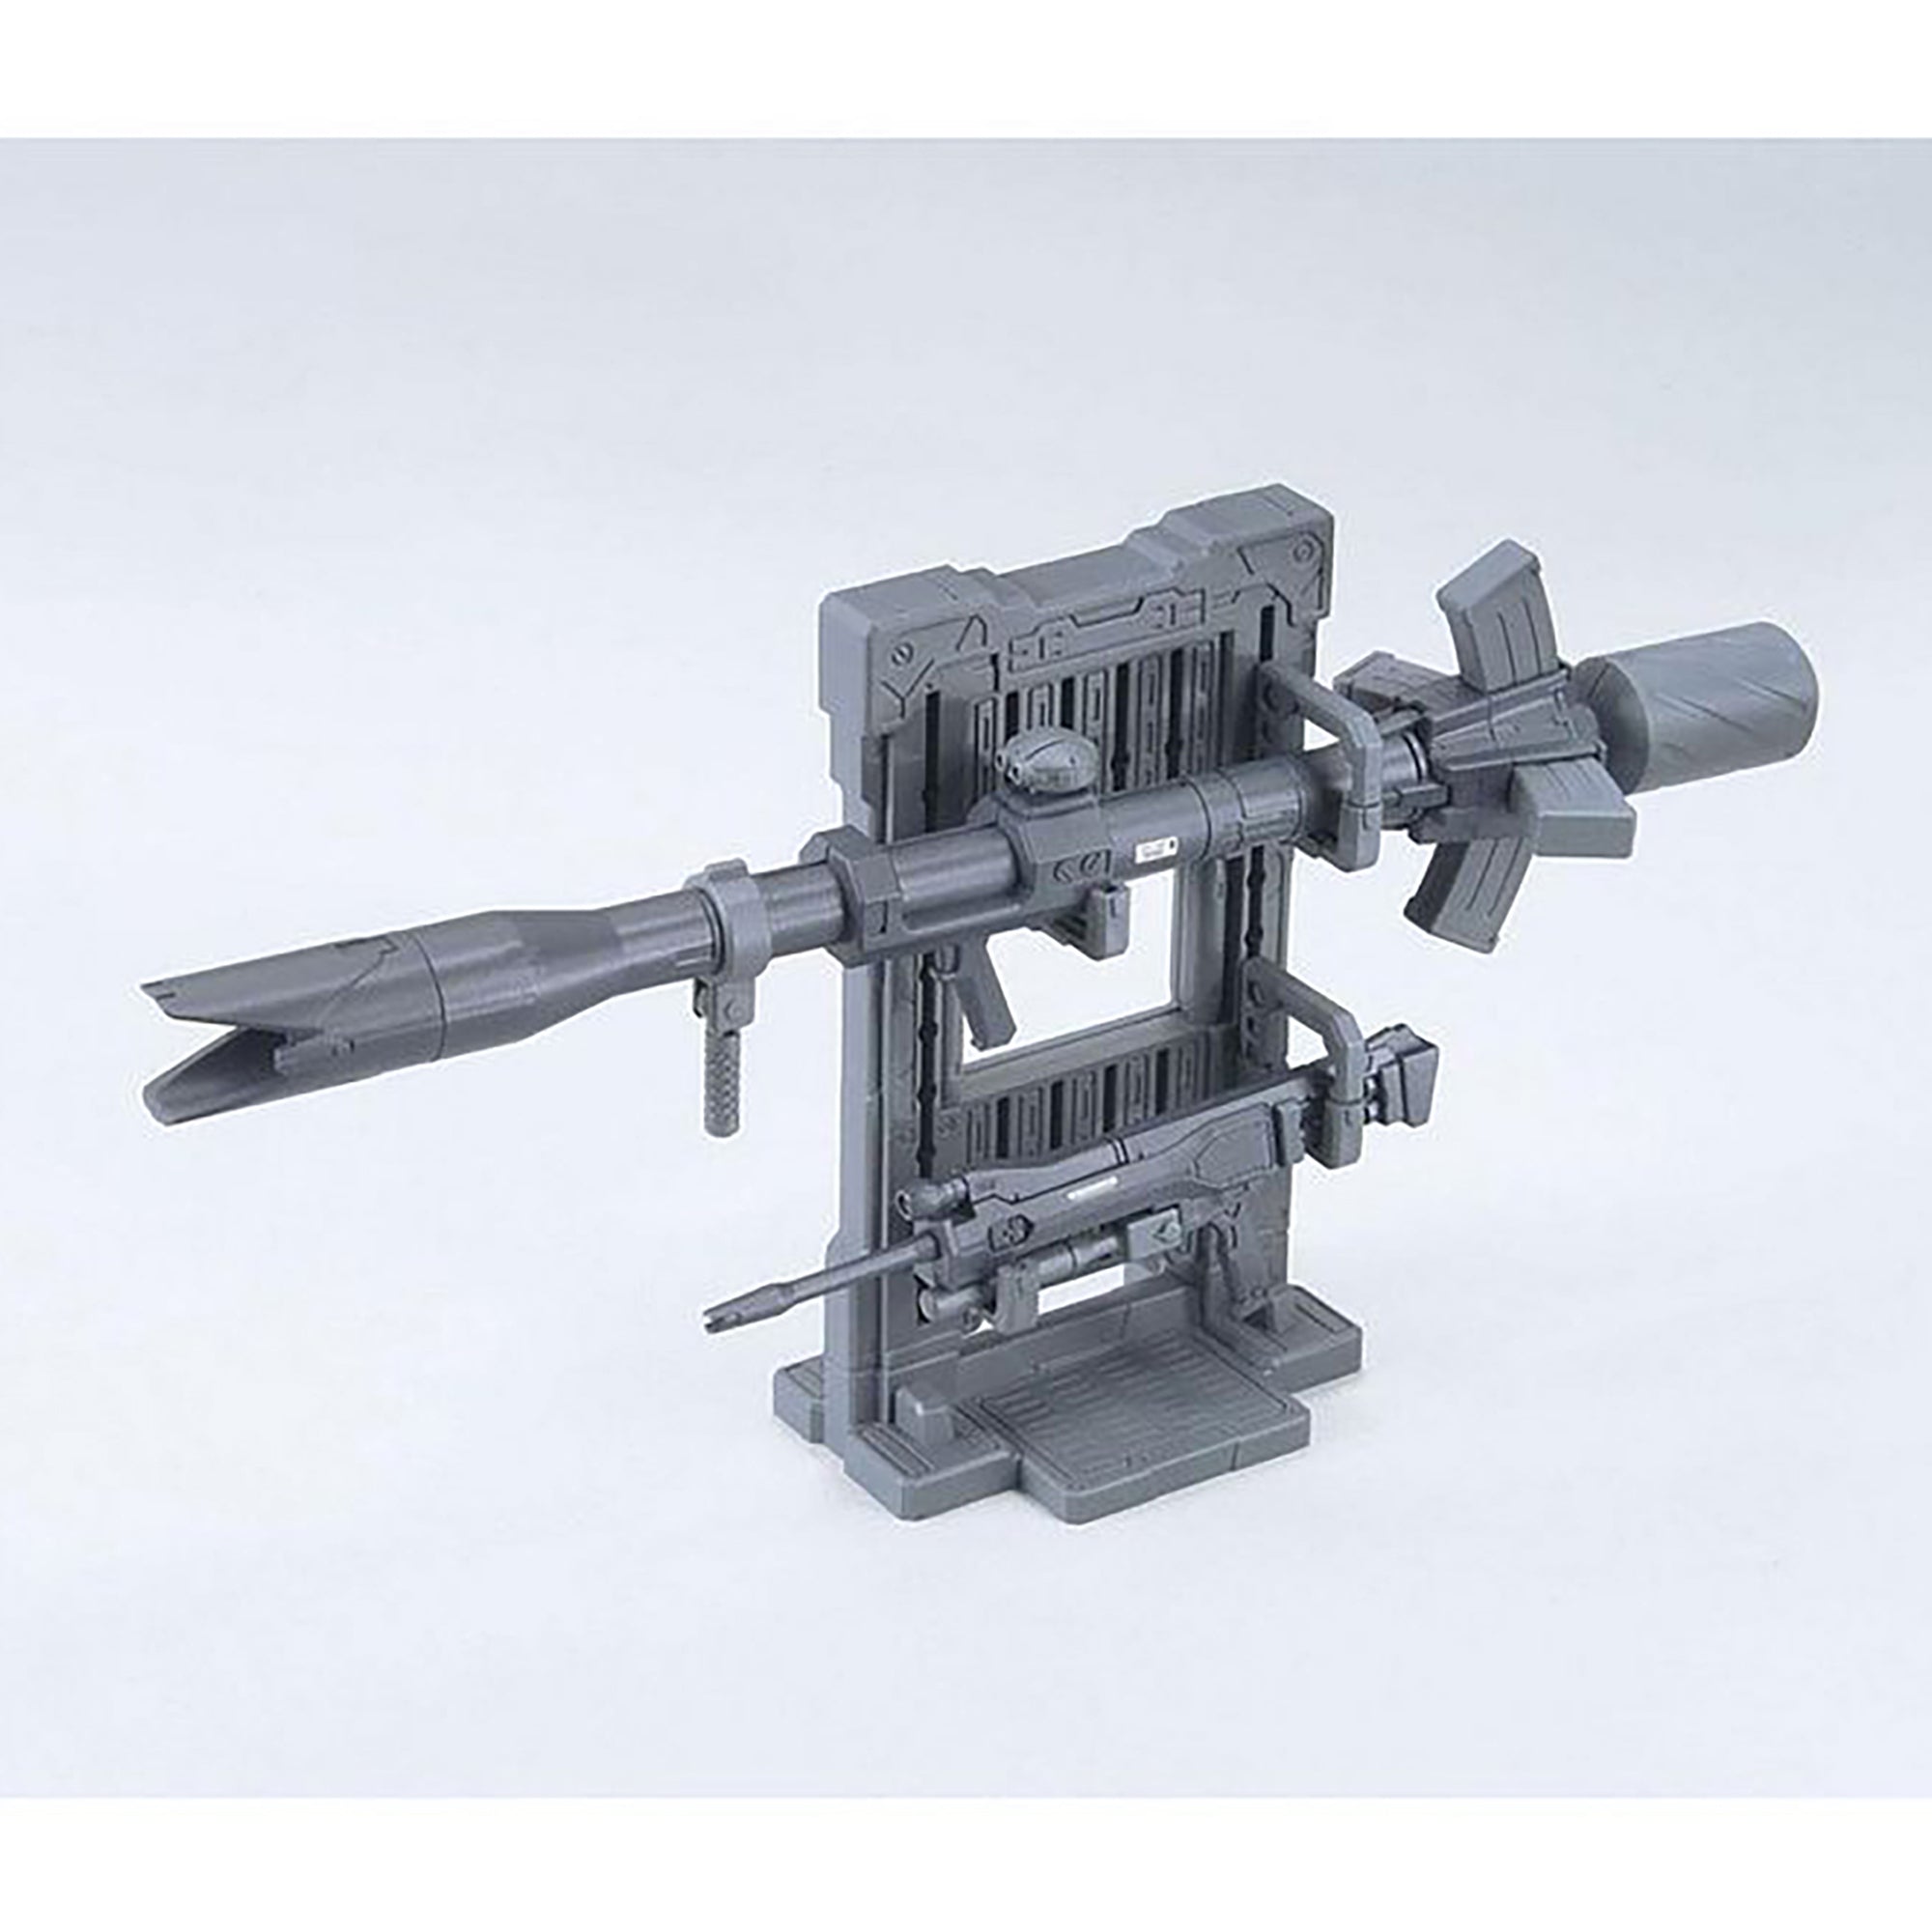 Gundam Infinity 1/144 System Weapon 010 Strike Bazooka and Beam Rifle Accessory Set